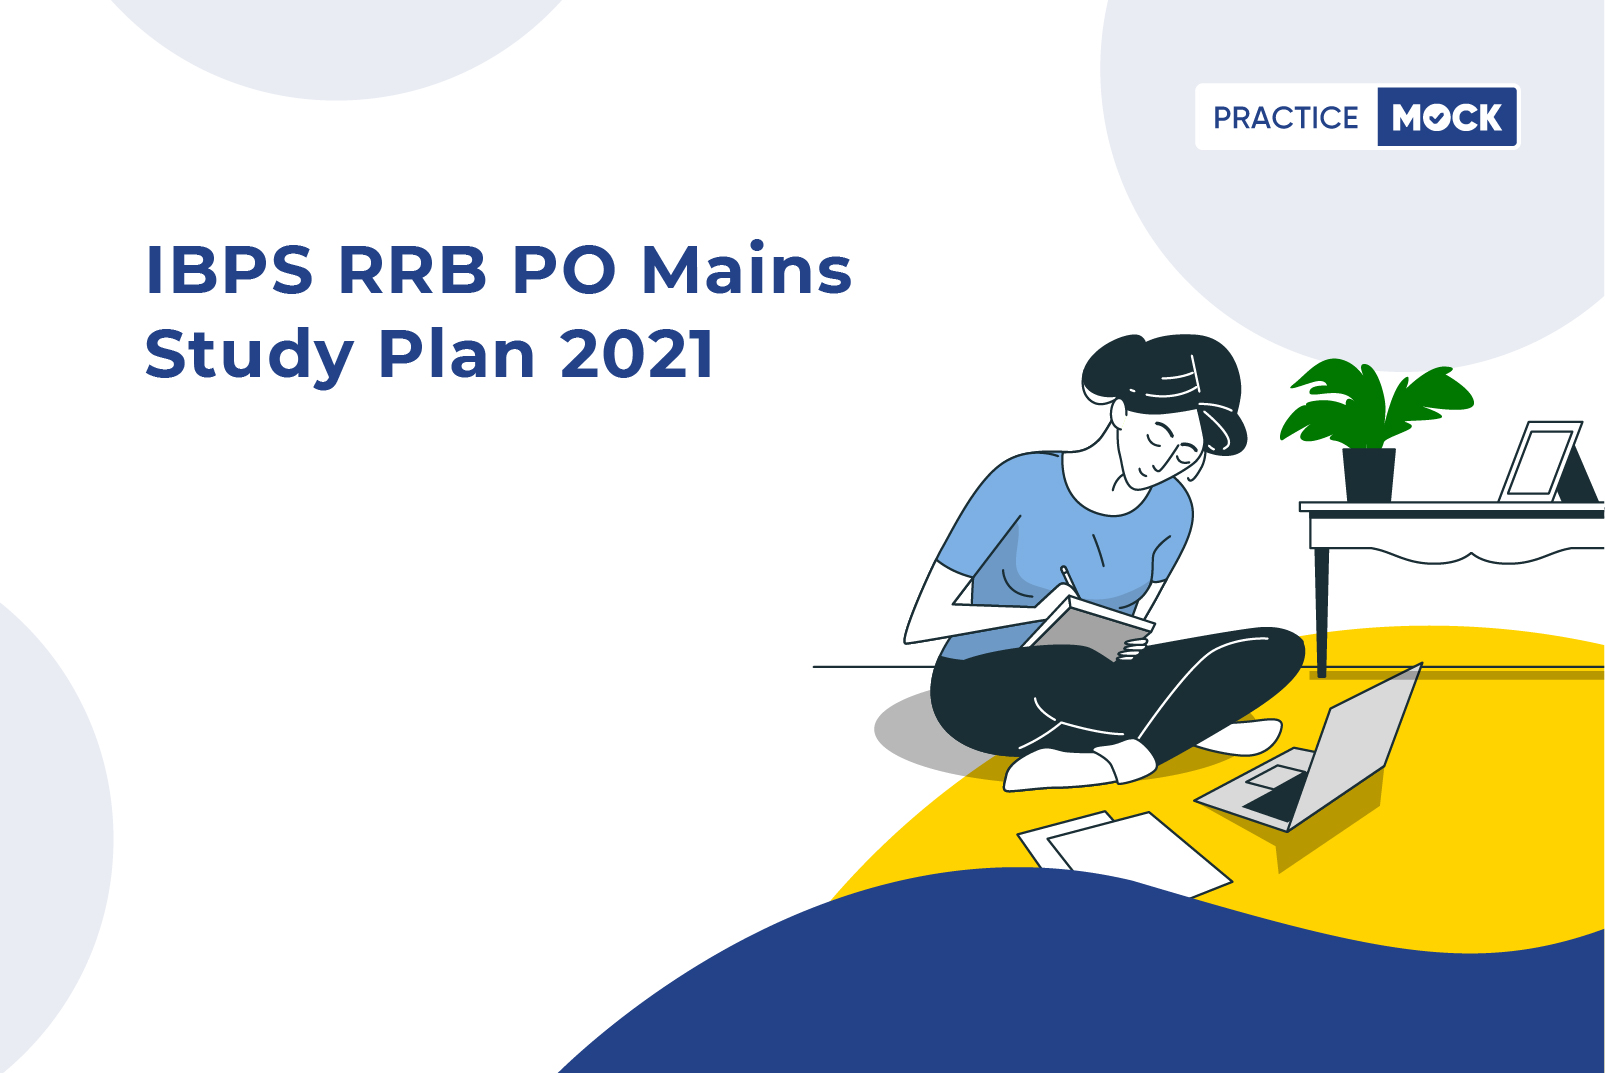 IBPS RRB PO Mains Study Plan 2021